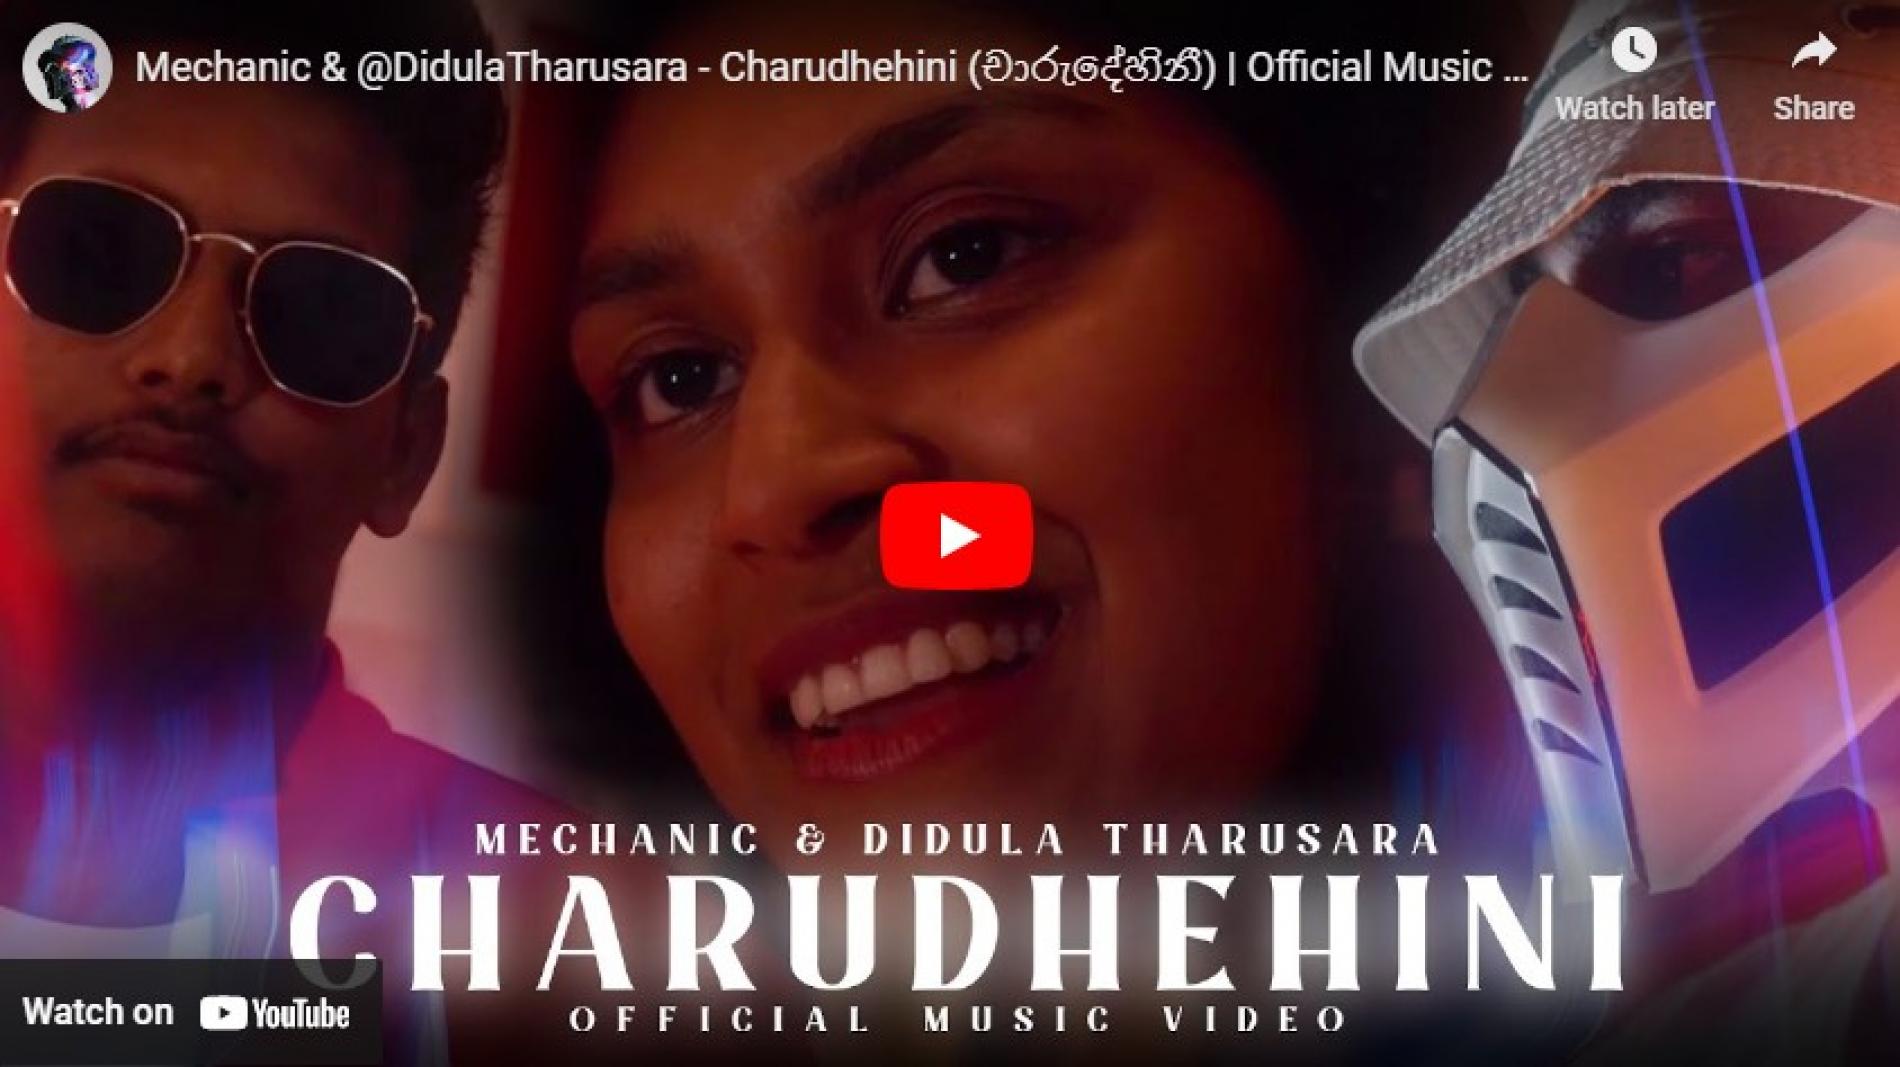 New Music : Mechanic & @DidulaTharusara – Charudhehini (චාරුදේහිනී) | Official Music Video